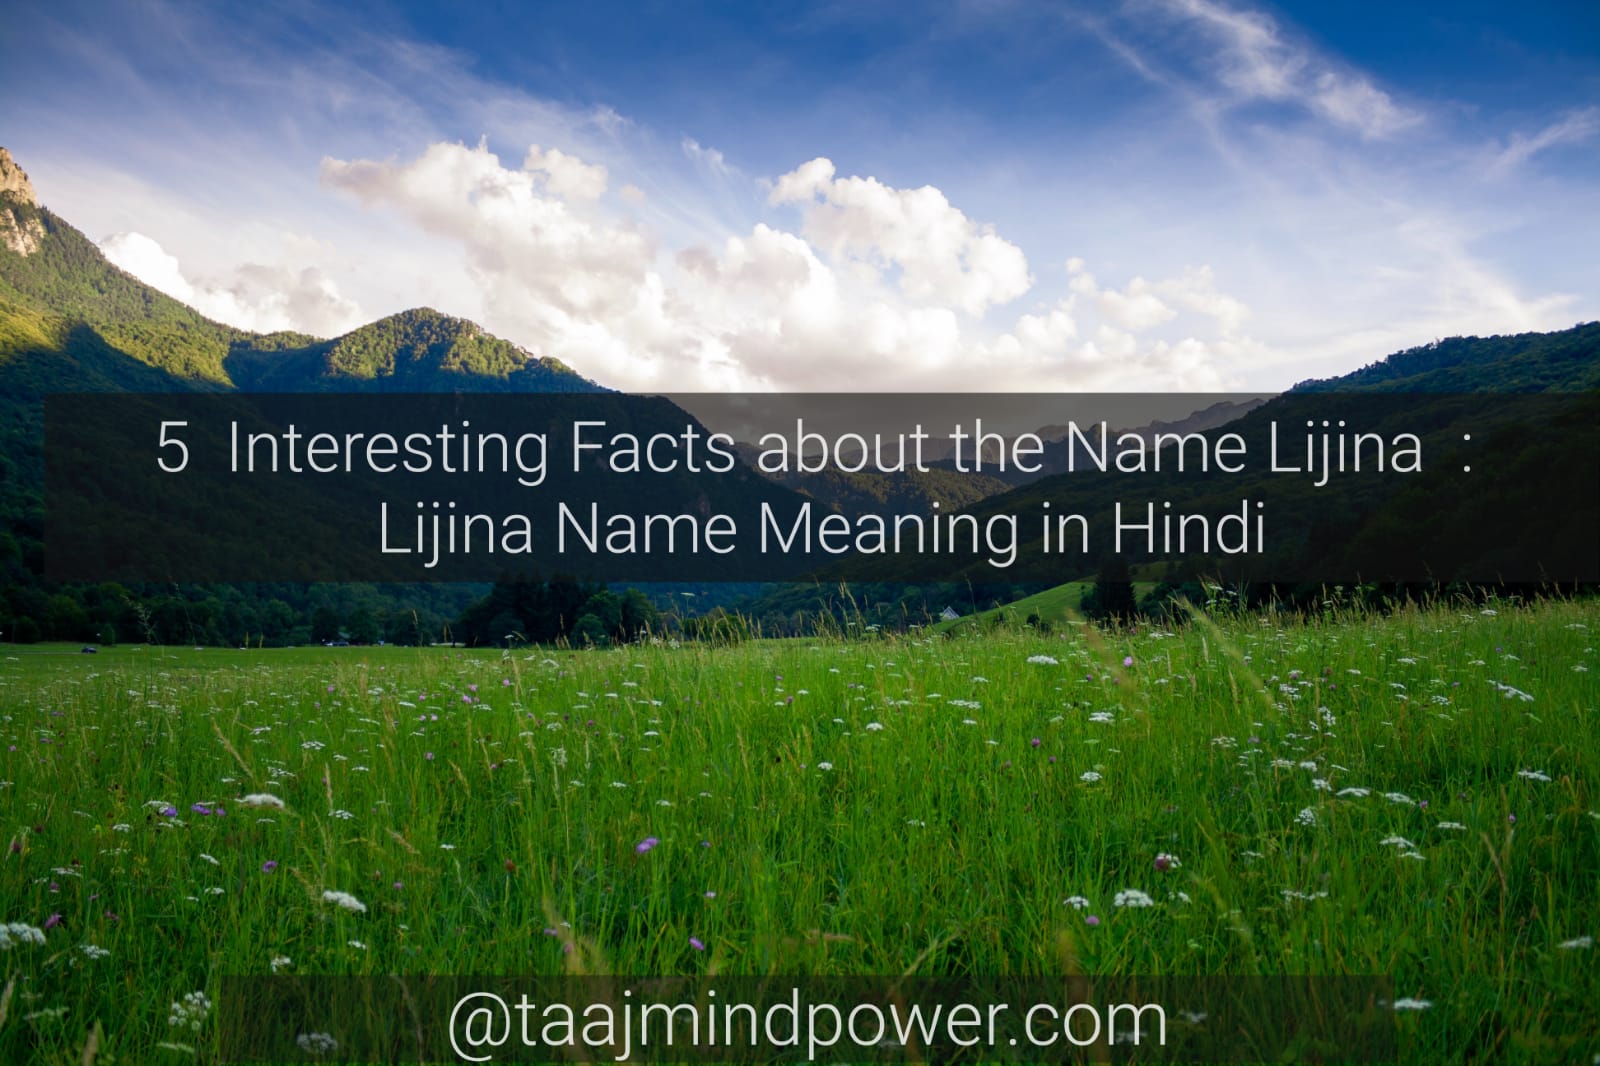 Lijina Name Meaning in Hindi